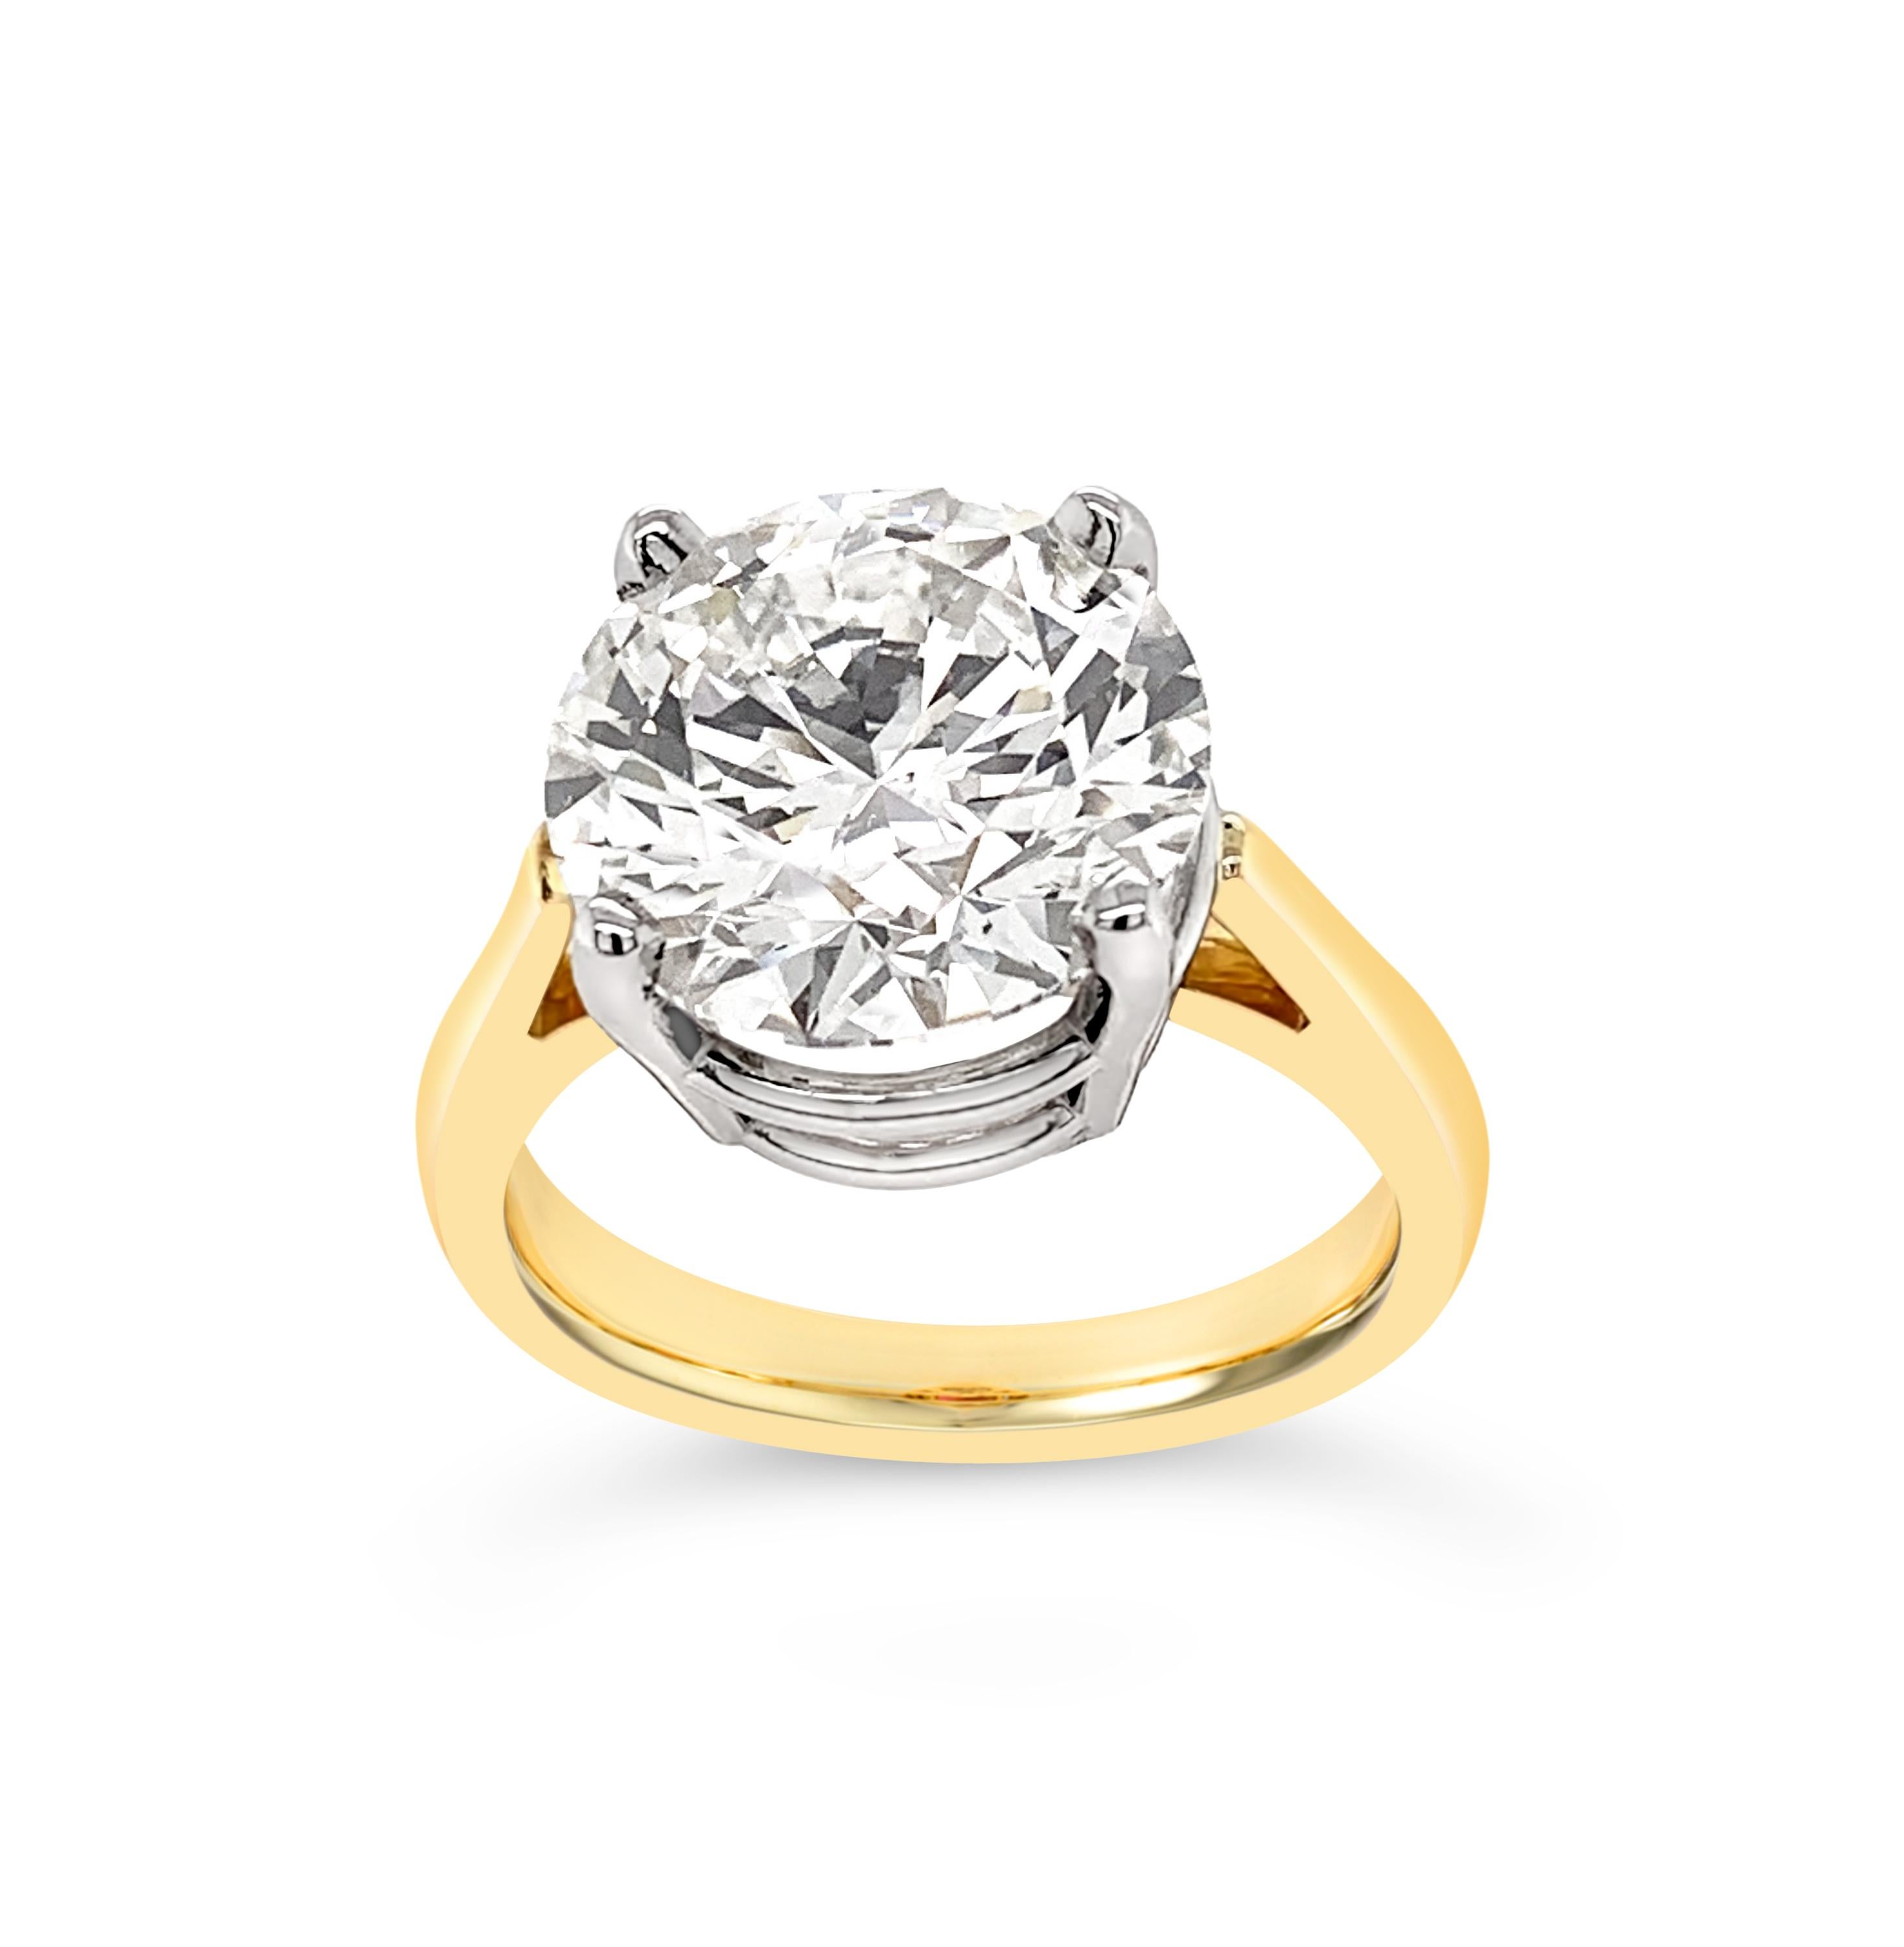 Stunning 5.11 Carat Diamond set in 18K Yellow Gold ring with Platinum mounting.  Diamond is GIA Certified as 